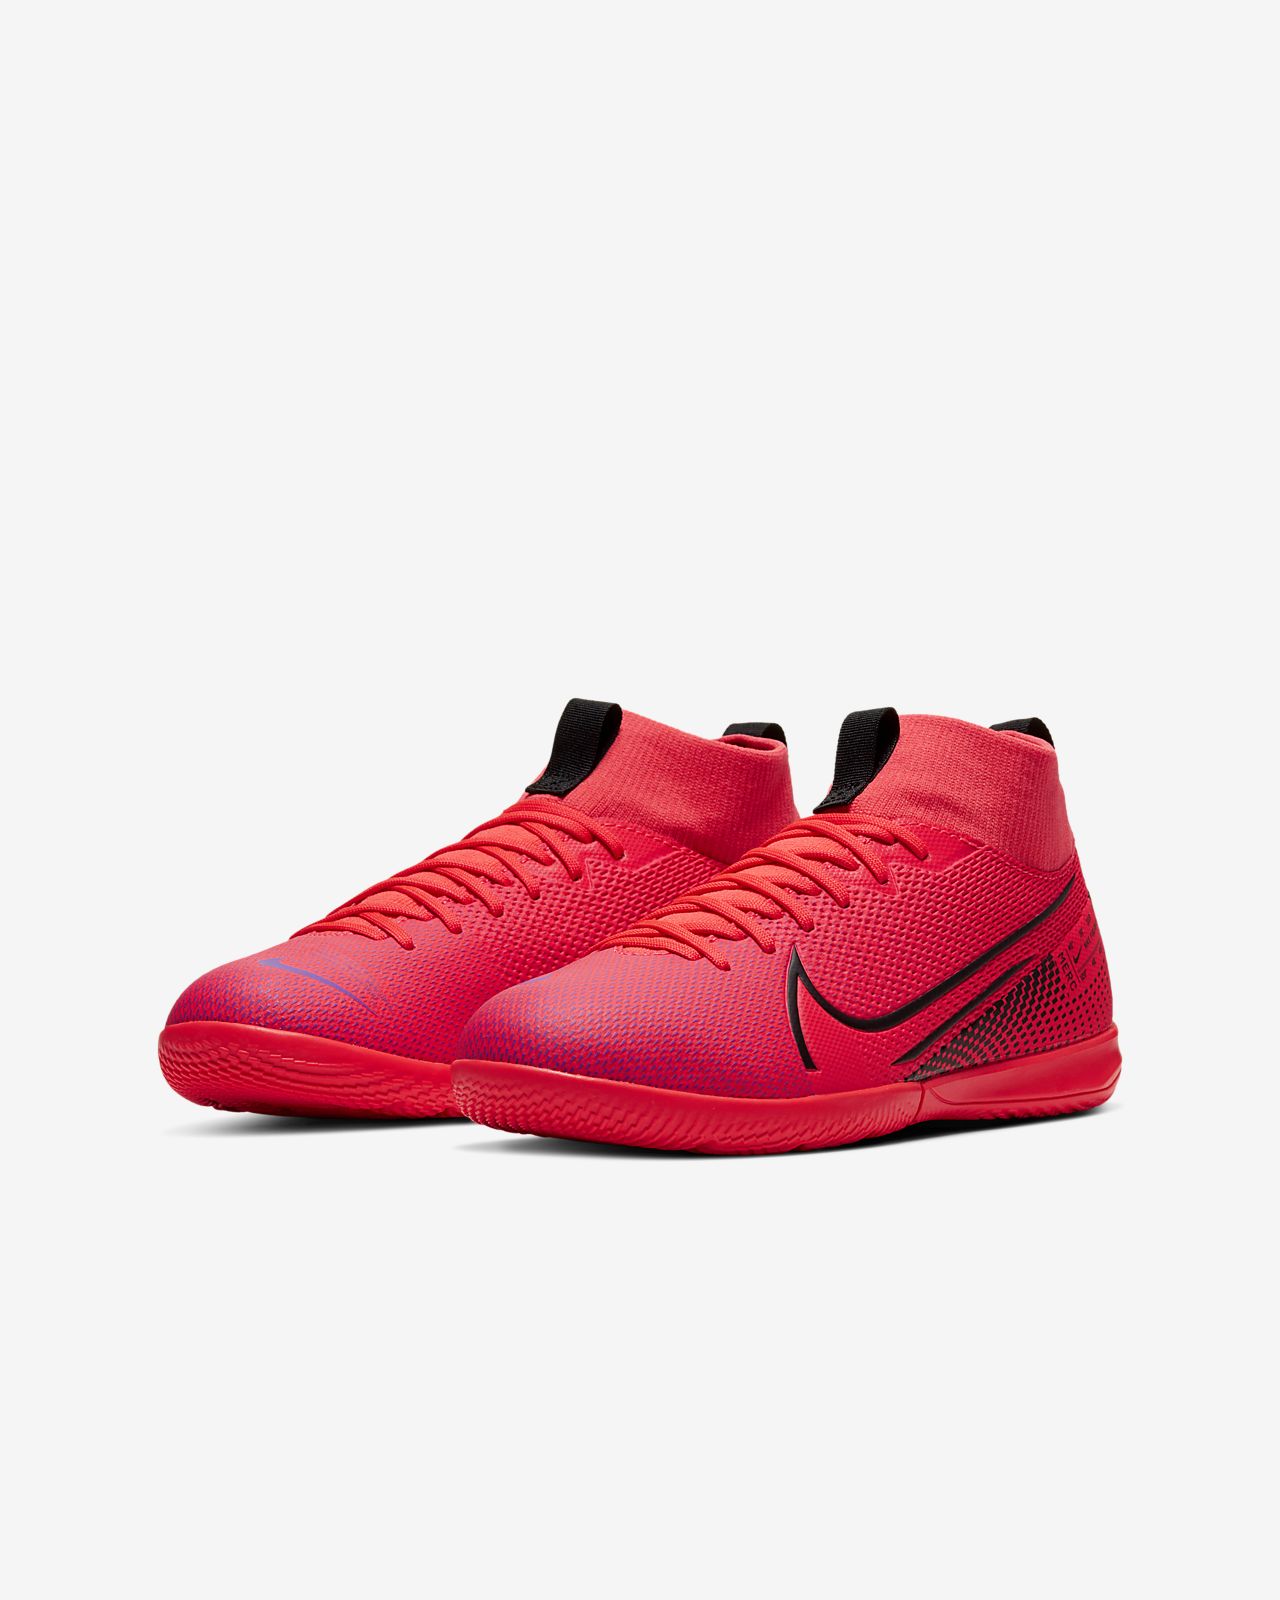 Sepatu Futsal Nike Mercurial Superfly 7 Elite Laser. Shopee